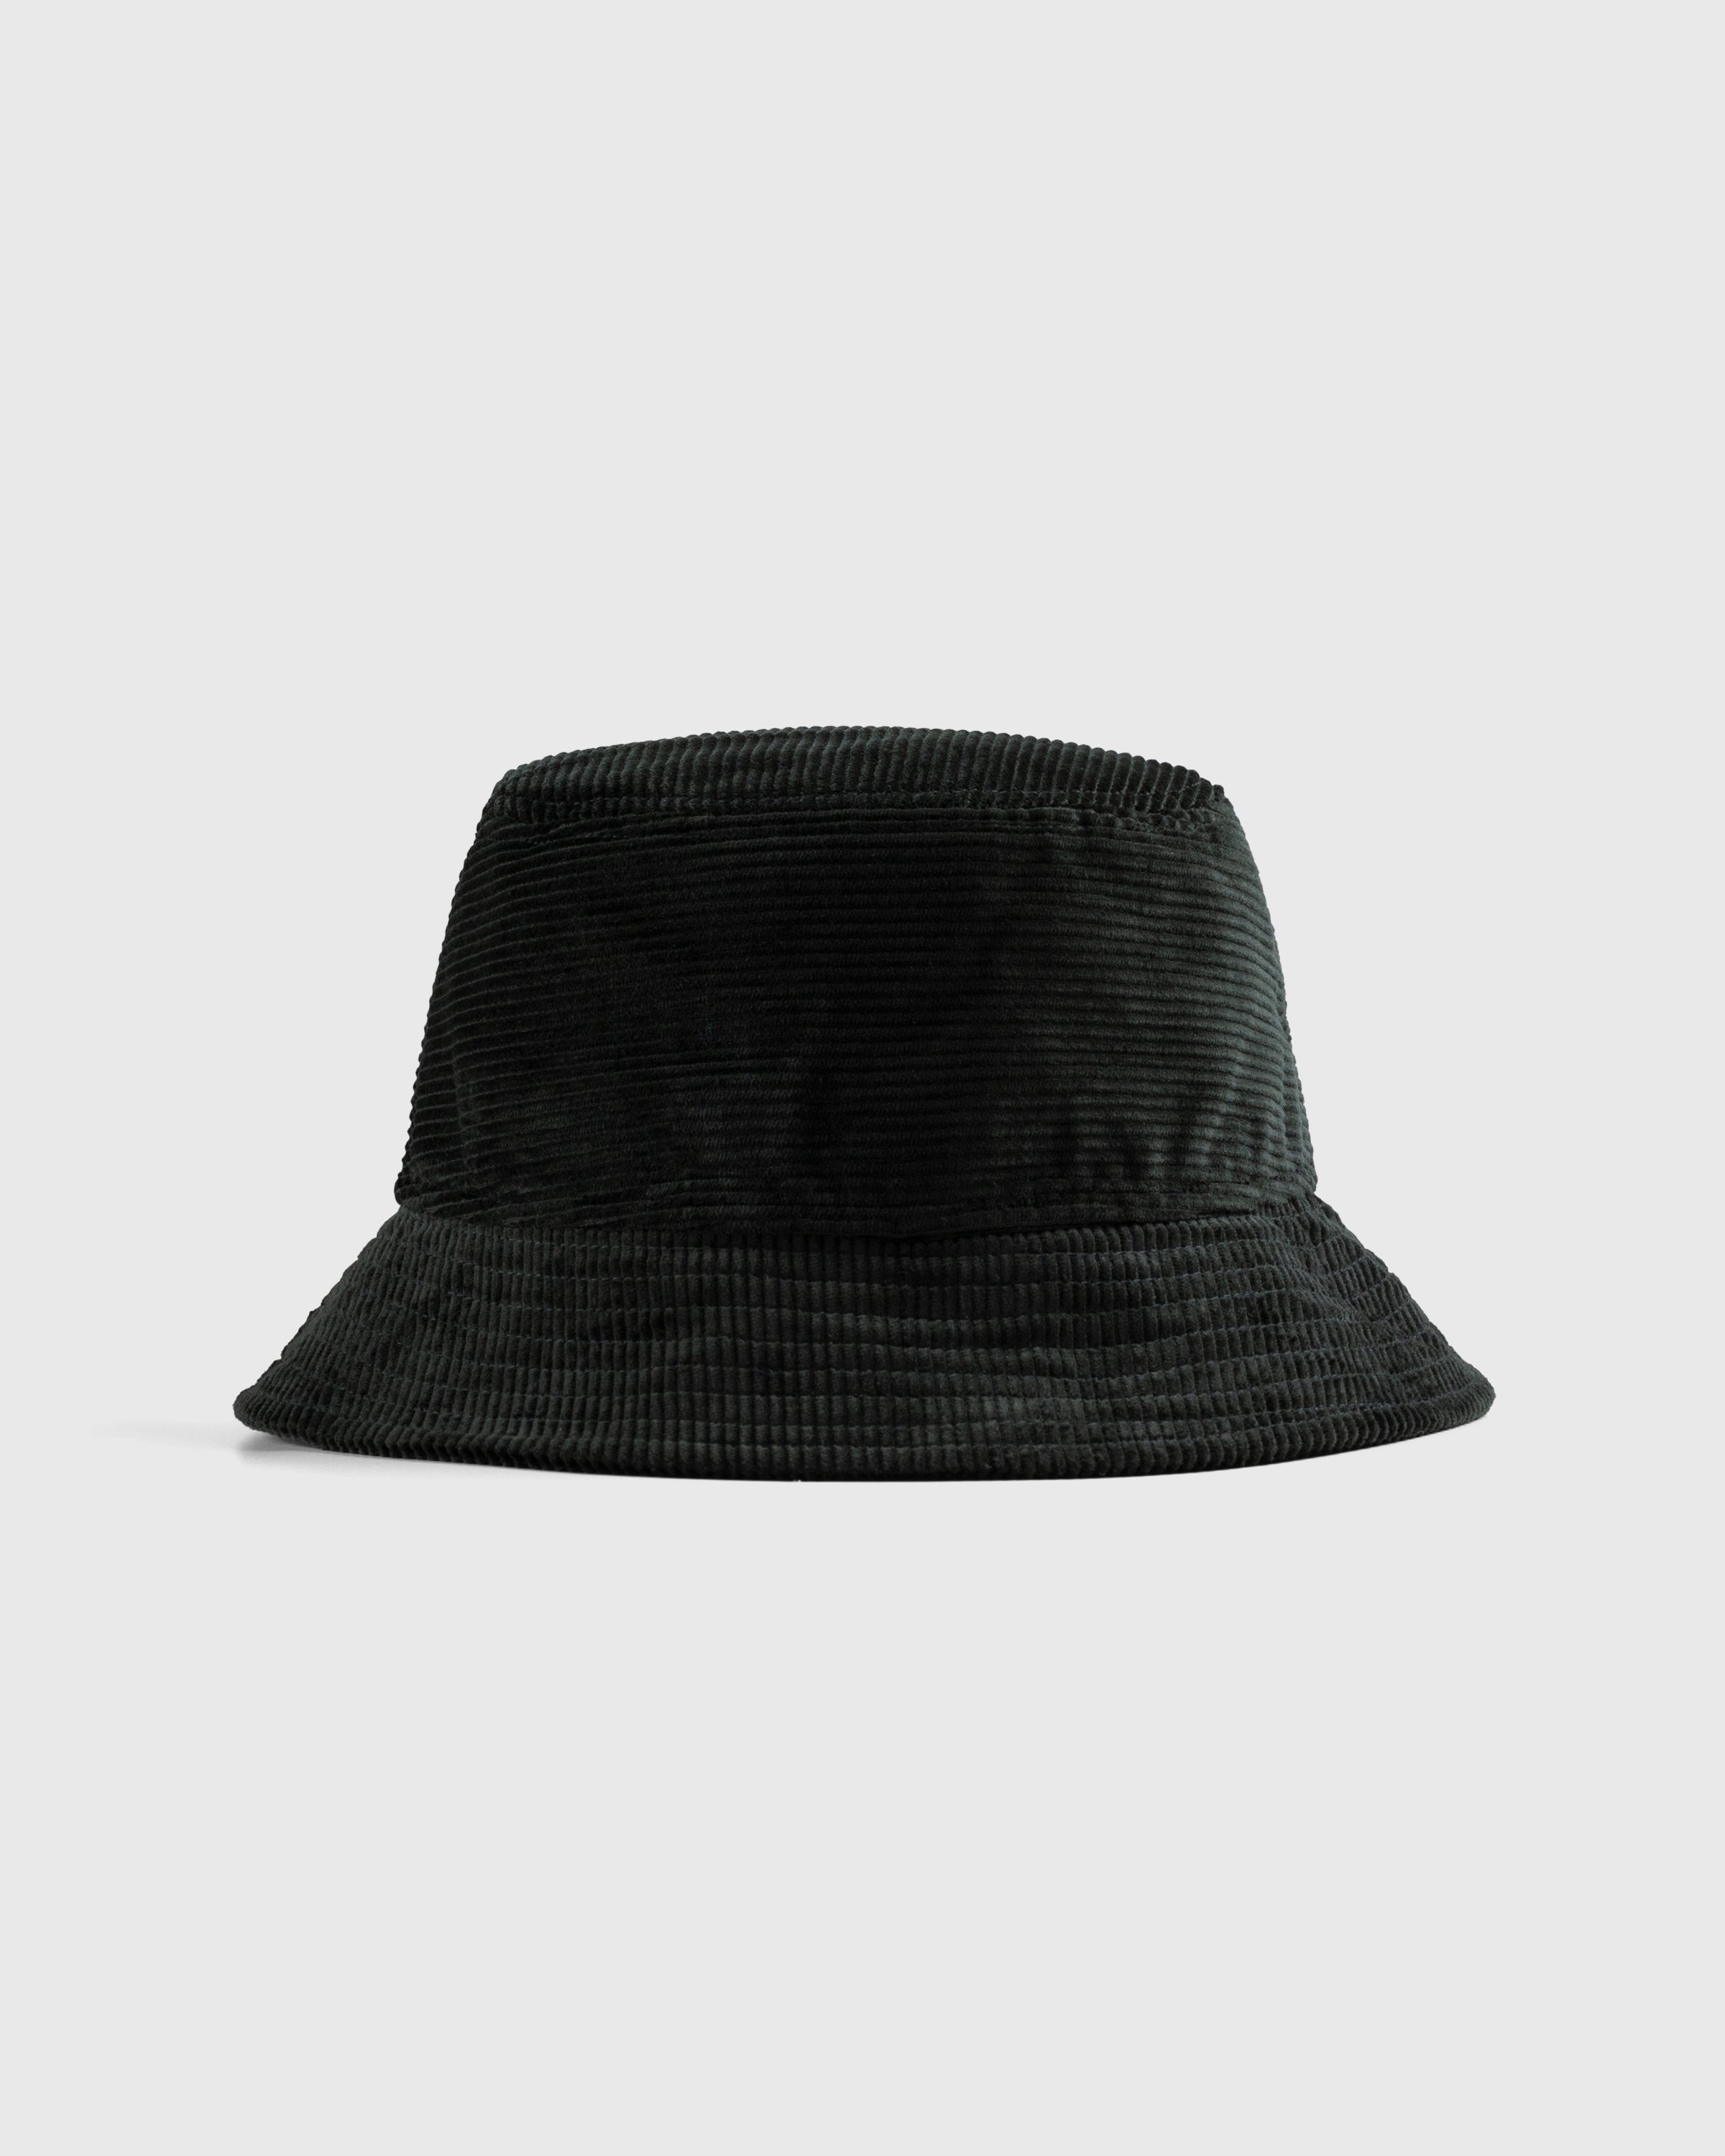 Carhartt WIP - Cord Bucket Hat Dark Cedar - Accessories - Brown - Image 2